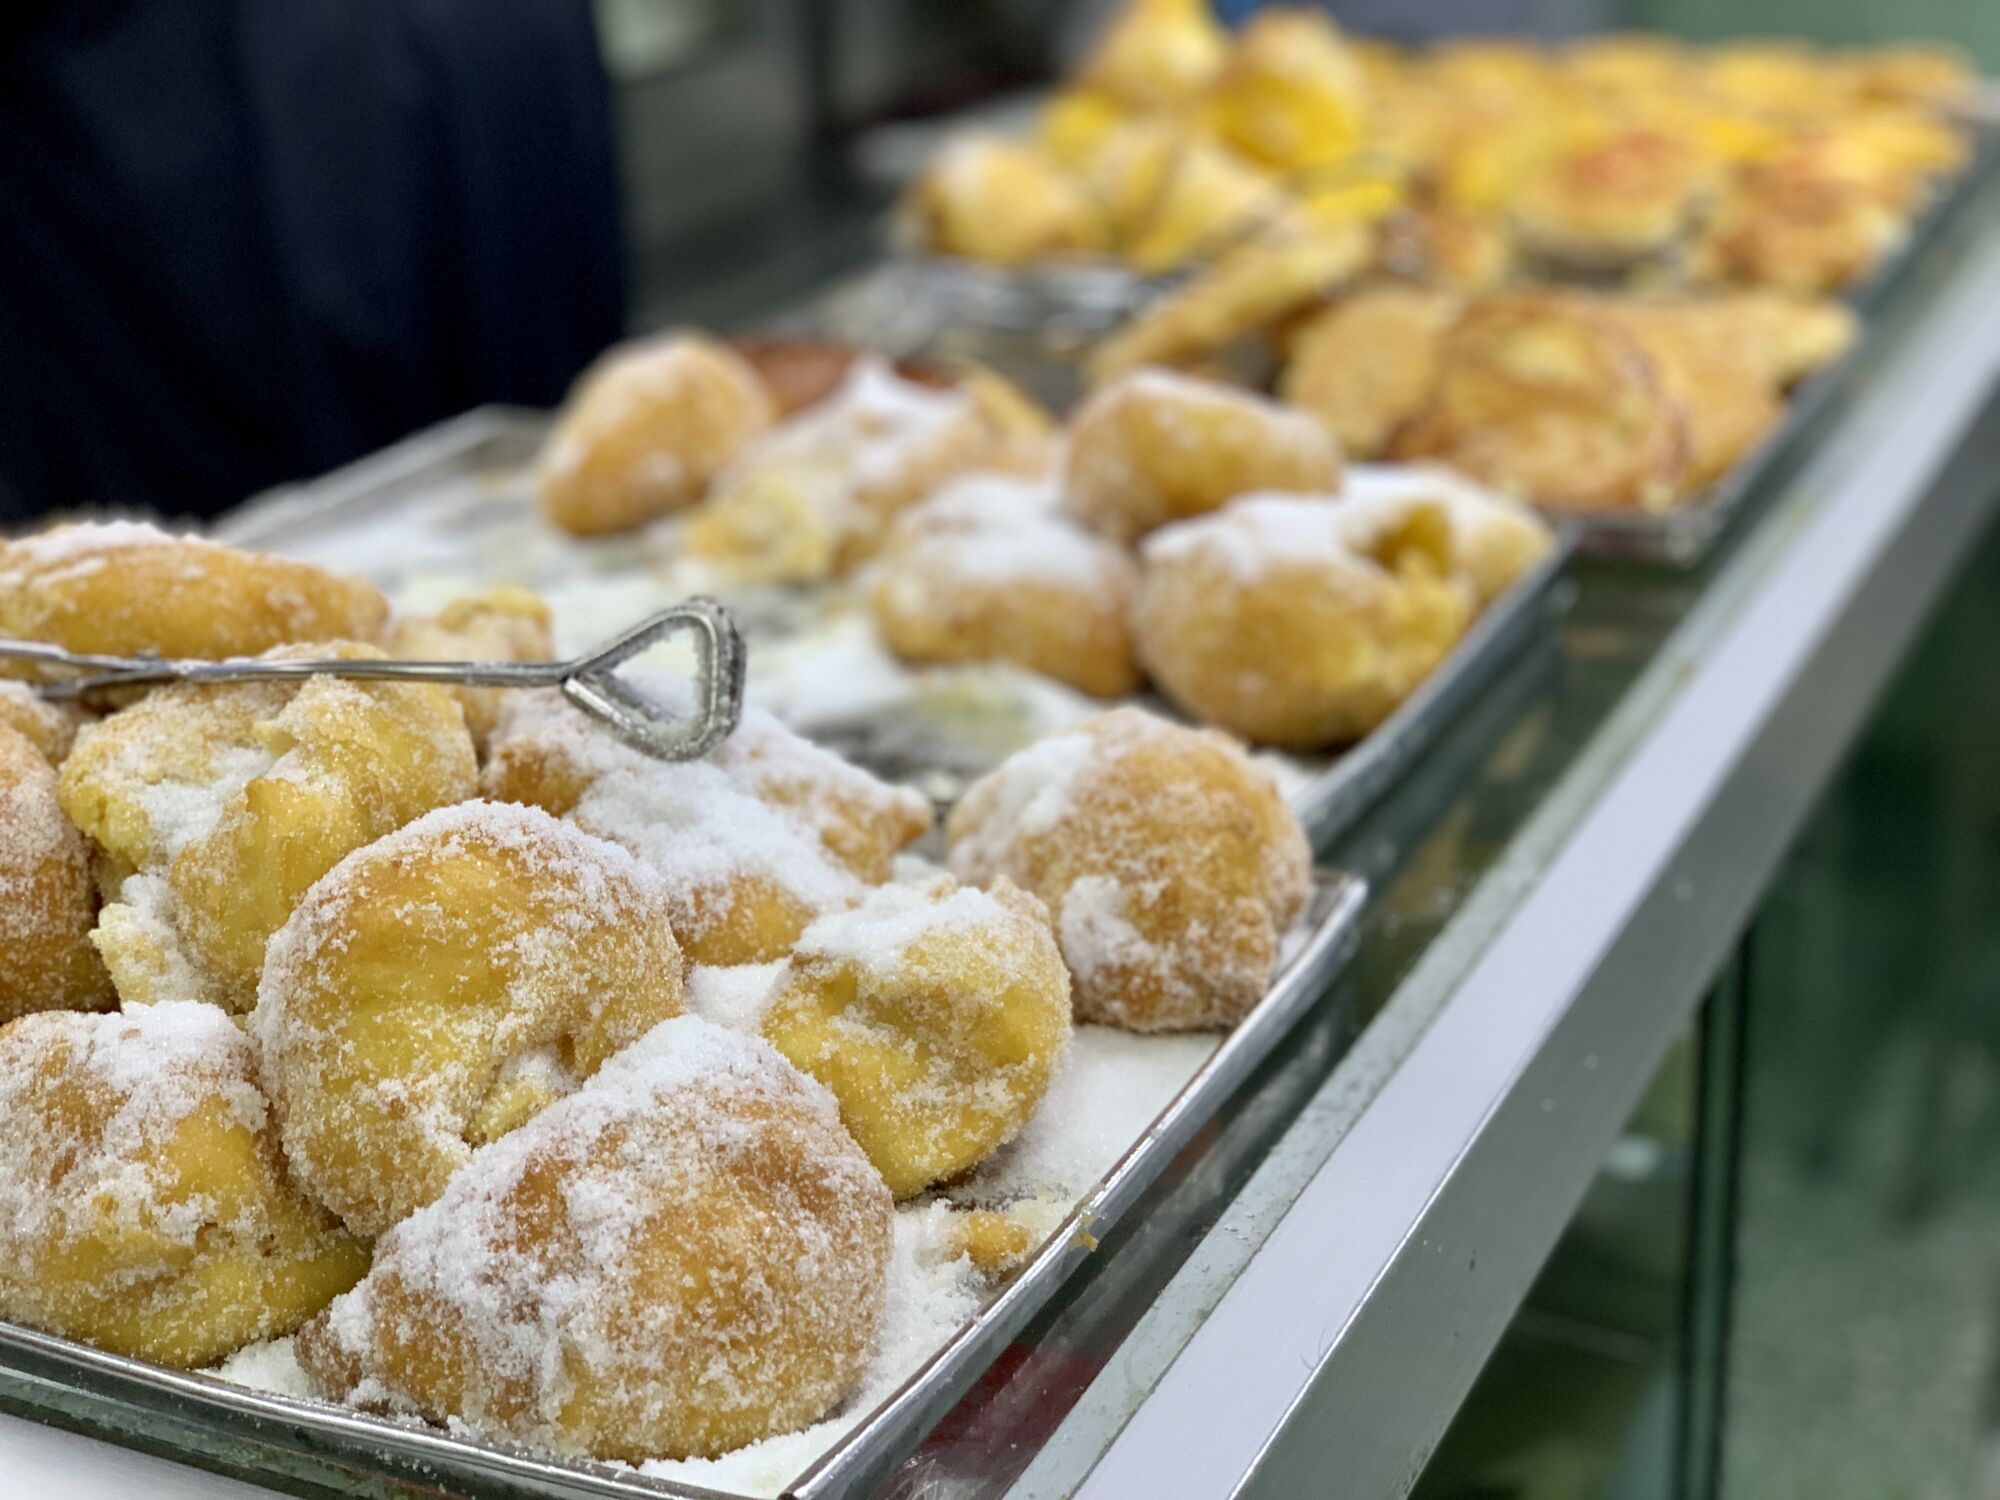 Nam Ping Interior Sweet Pastries on Trays View Macau Lifestyle